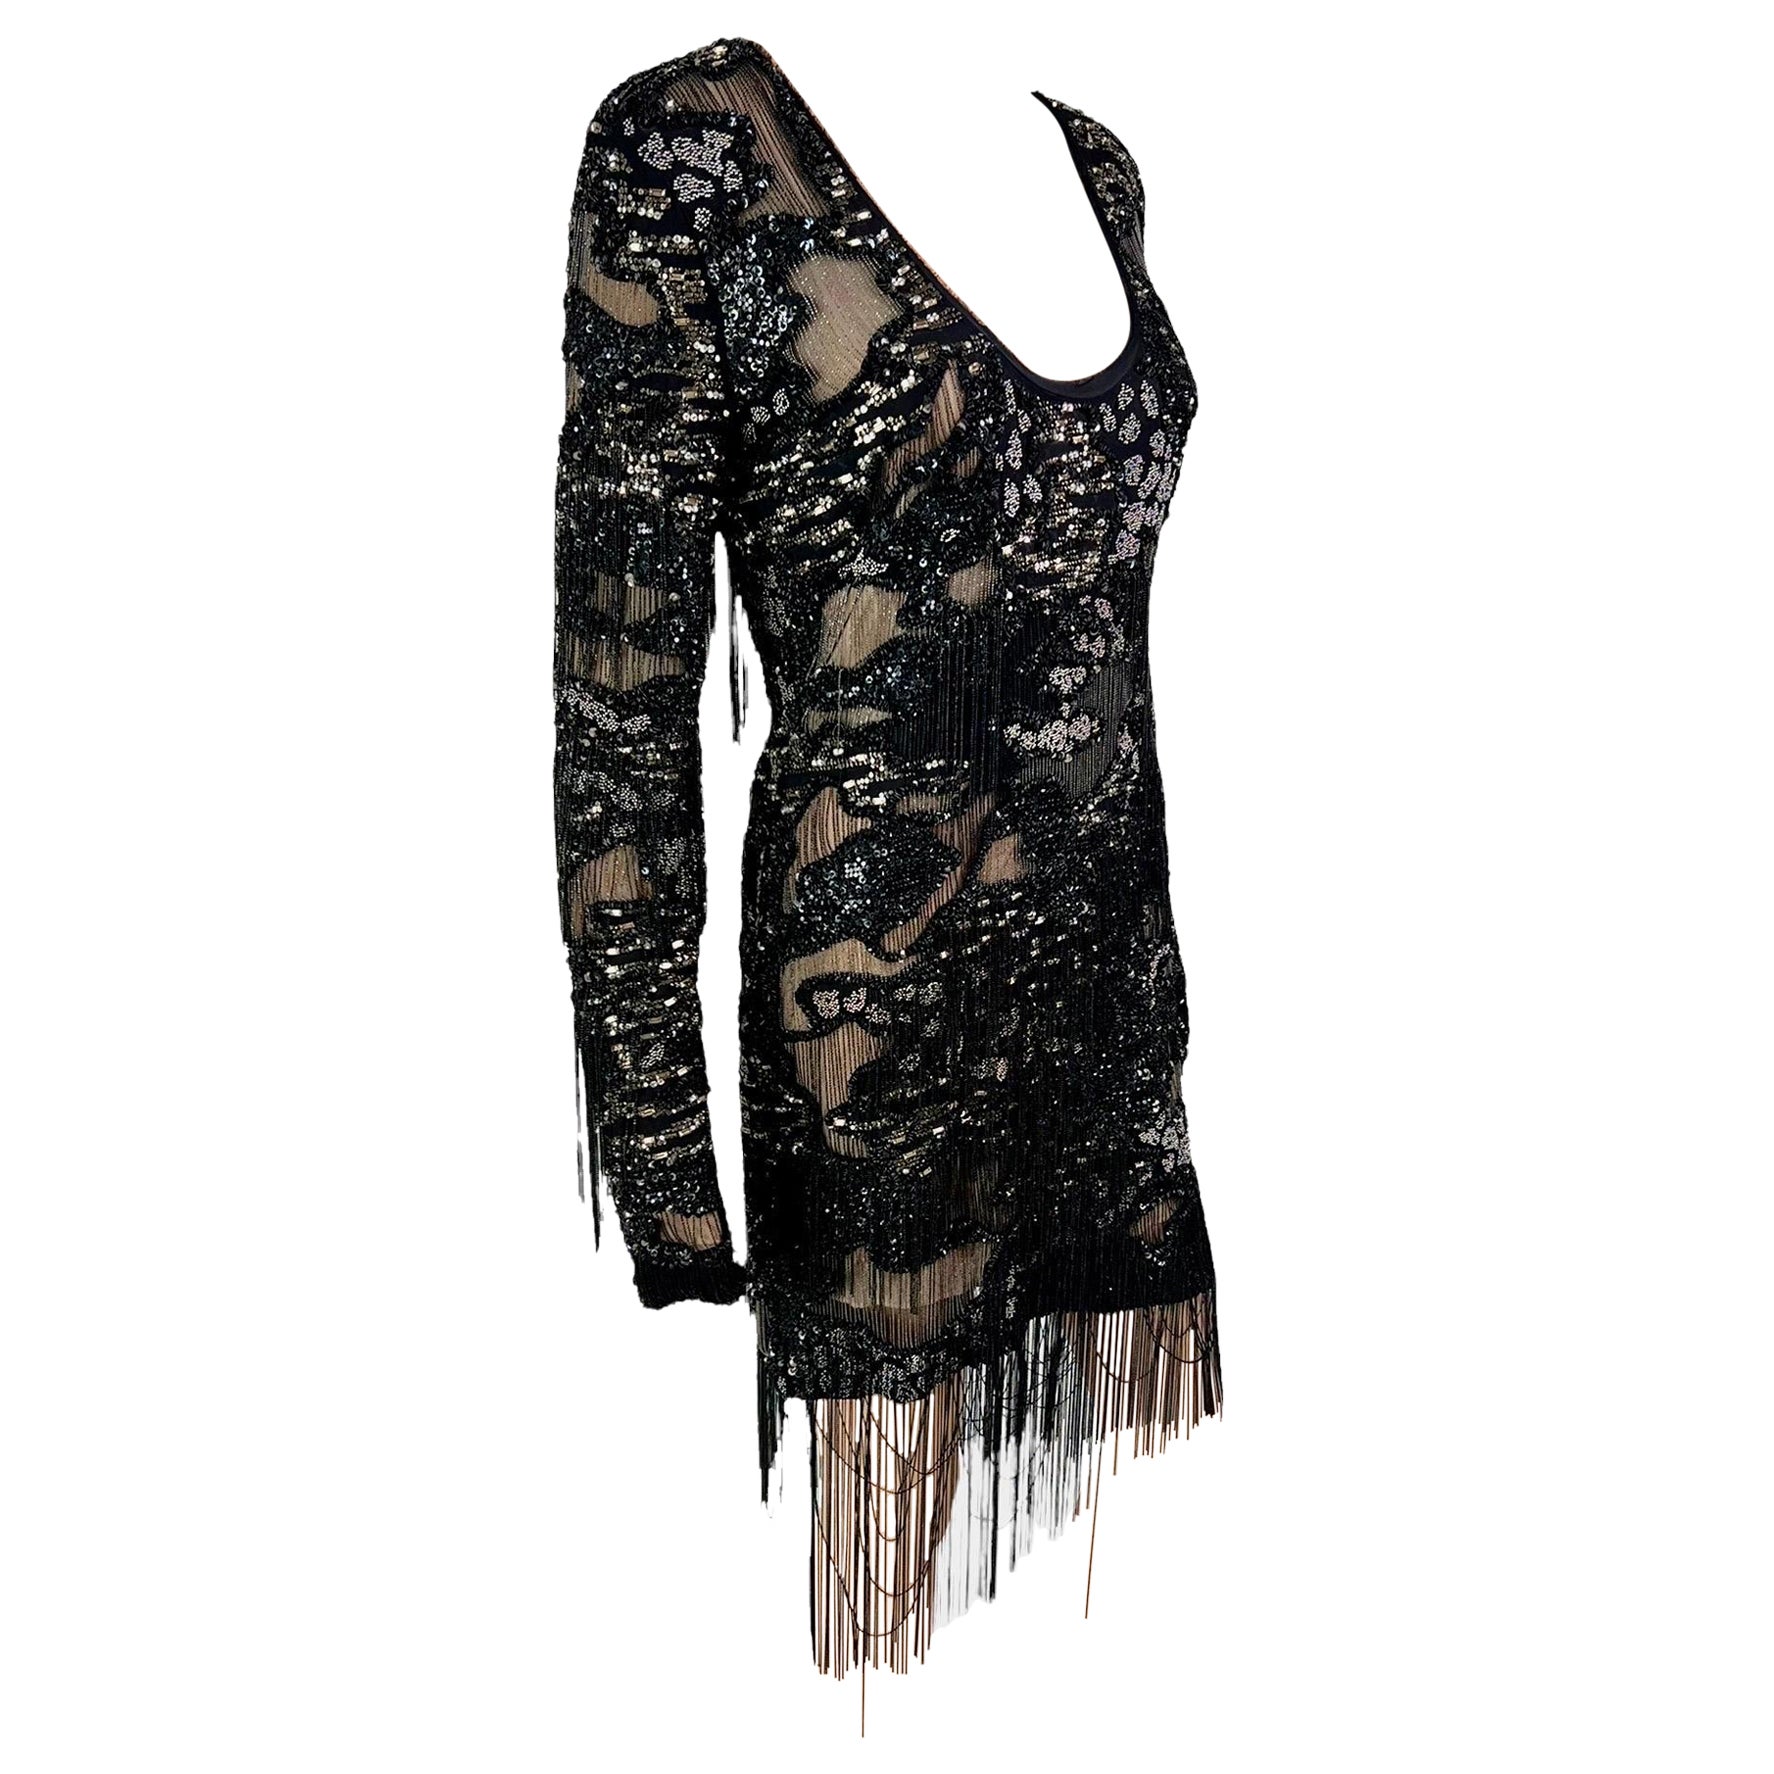 Roberto Cavalli S/S 2016 Runway Embellished Chain Sheer Black Mini Evening Dress For Sale